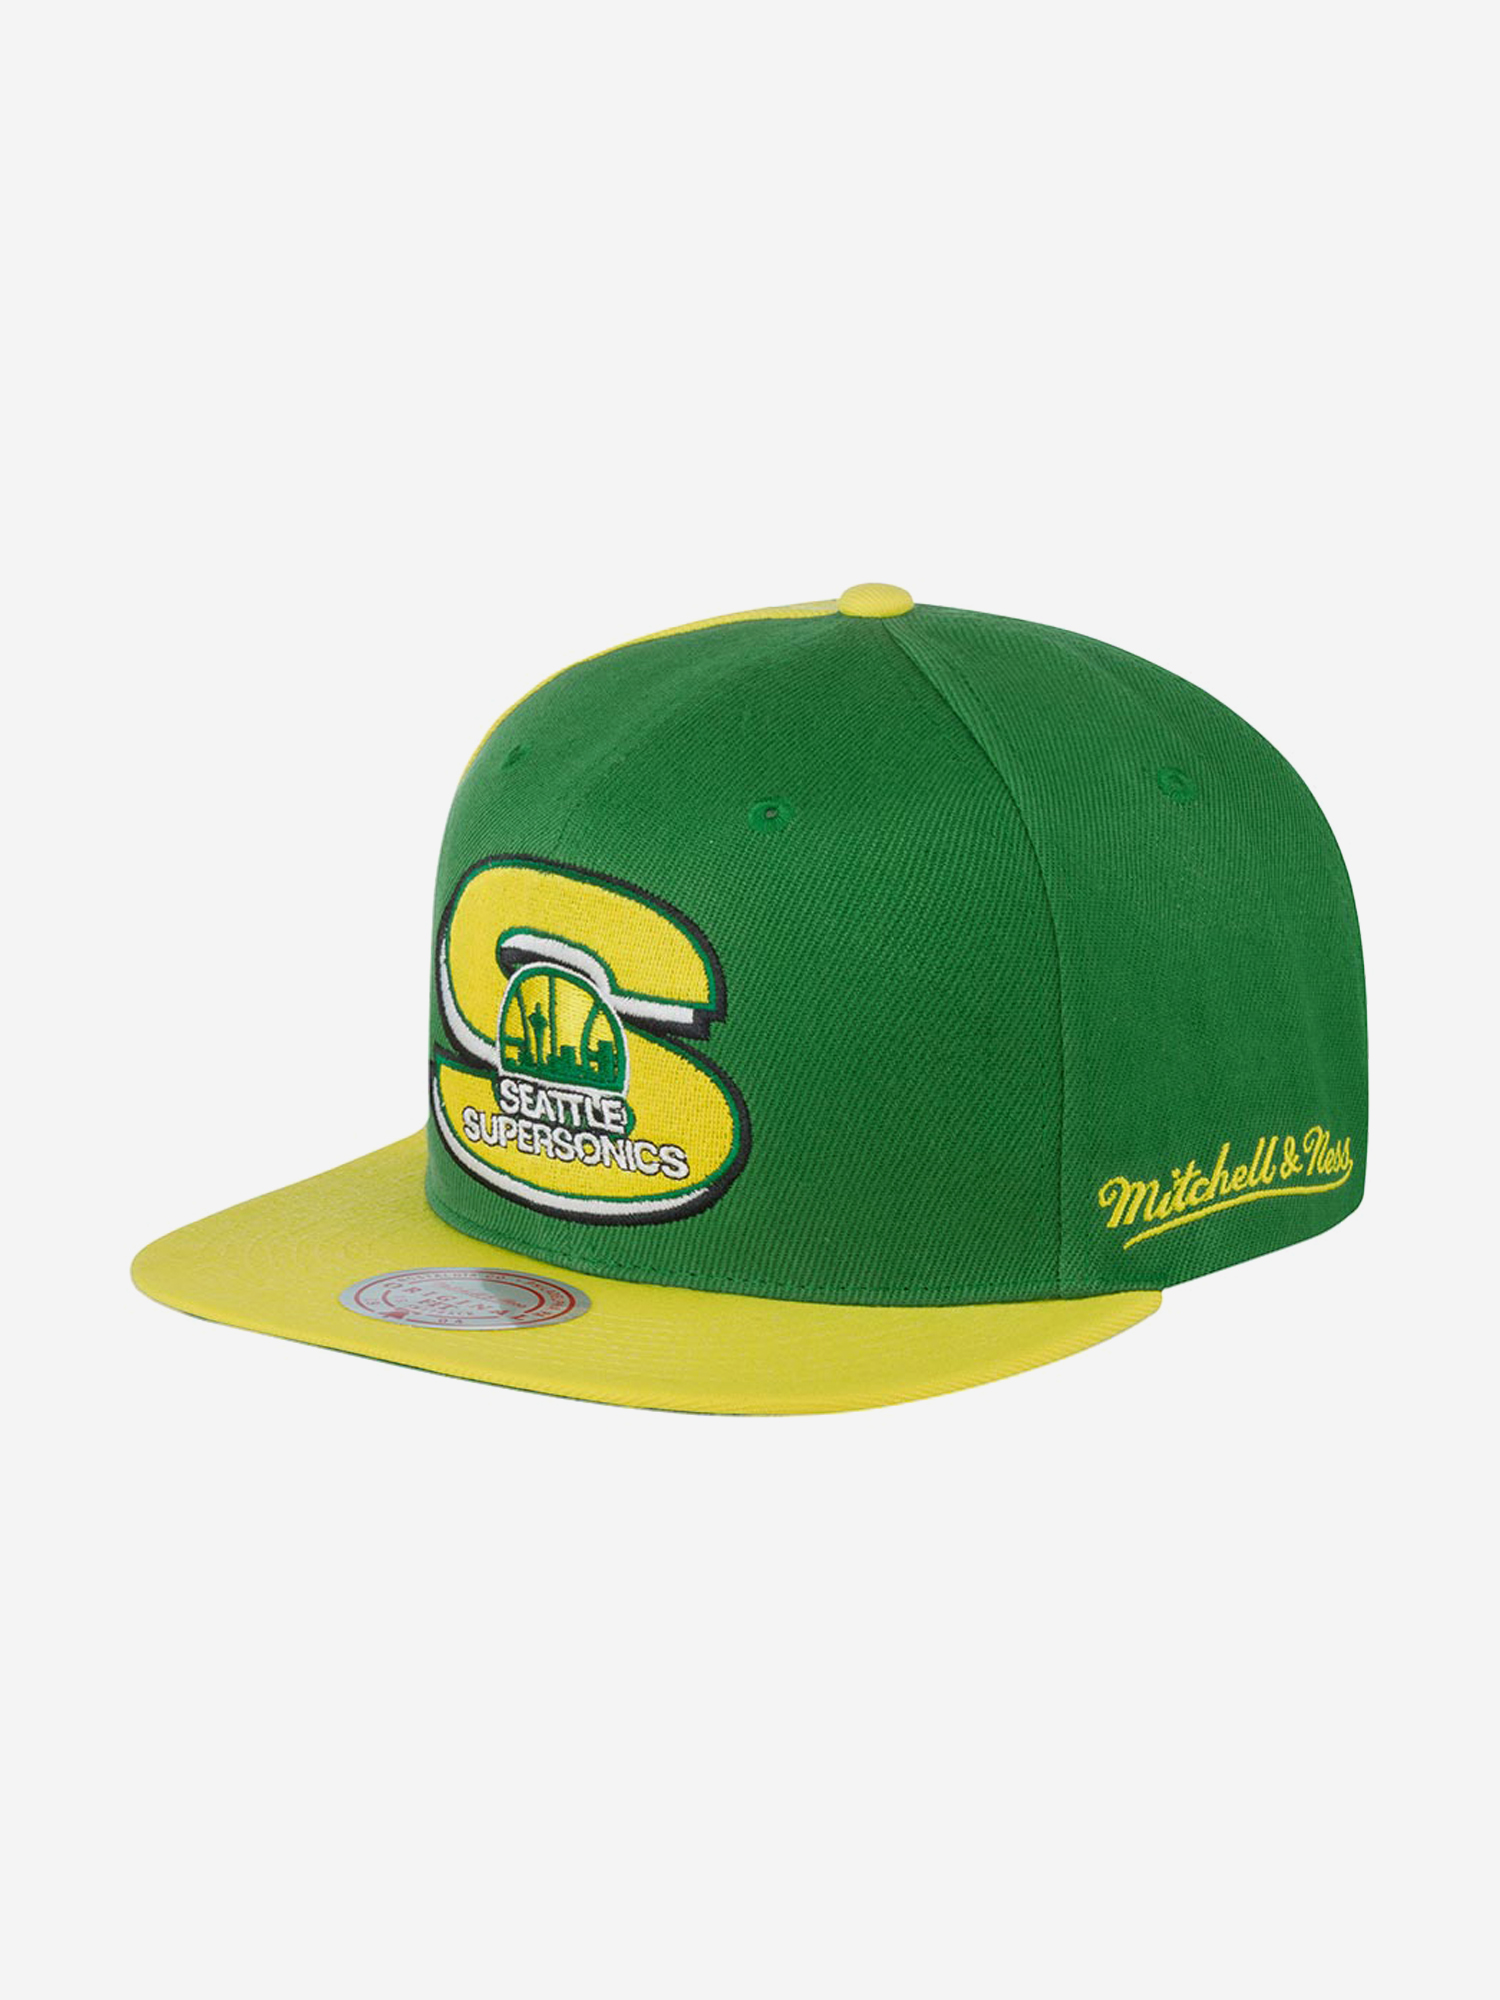 Бейсболка с прямым козырьком MITCHELL NESS 6MUSSH21299-SSUGNGD Seattle Supersonics NBA (зеленый), Зеленый